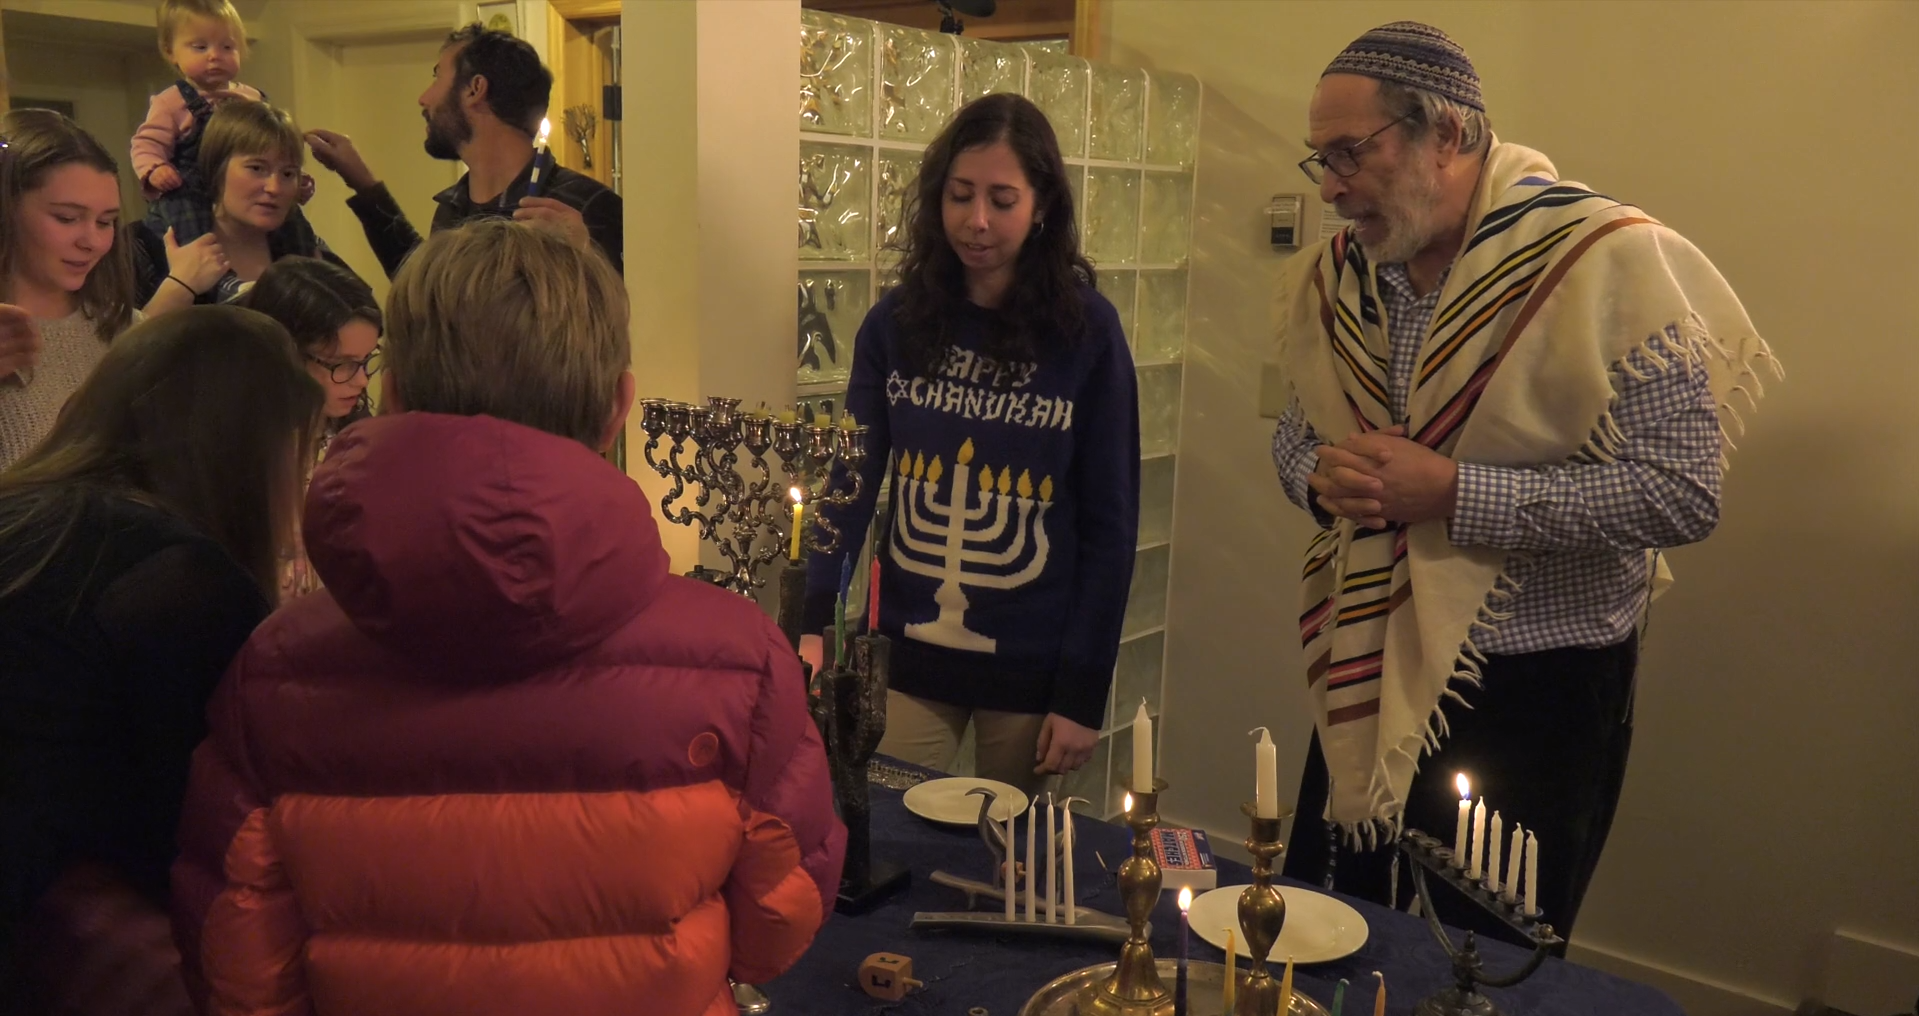 Rabbi Ed celebrates Hanukkah with his congregation